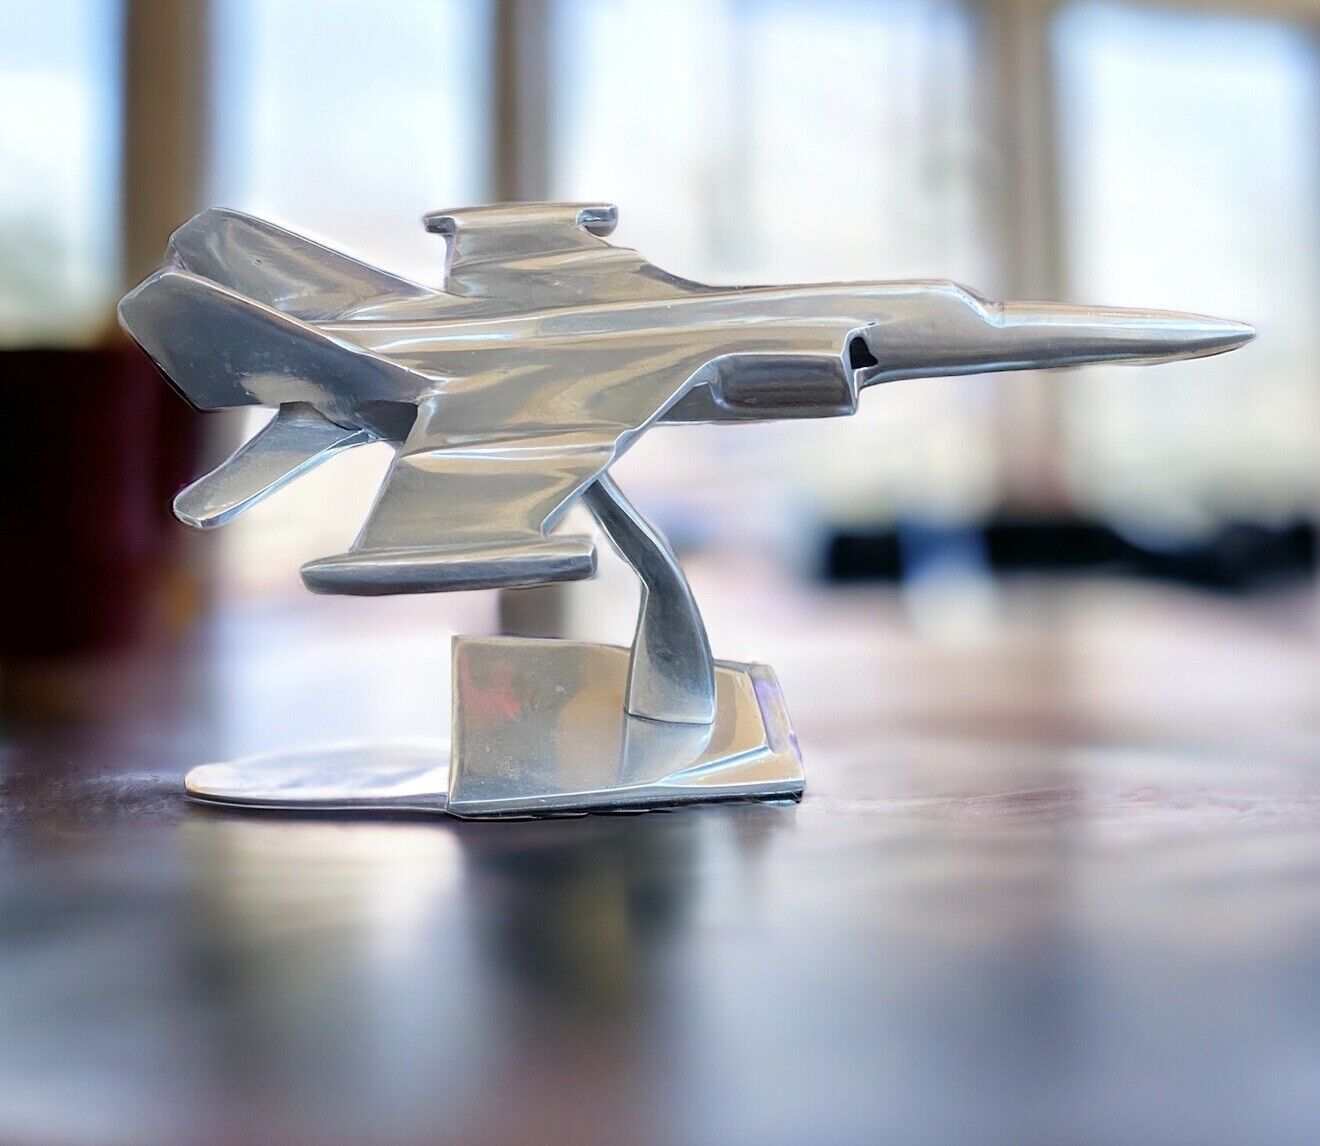 MIG 25 Foxbat Cast Aluminum Jet Fighter Airplane Desk Sculpture Model Stand